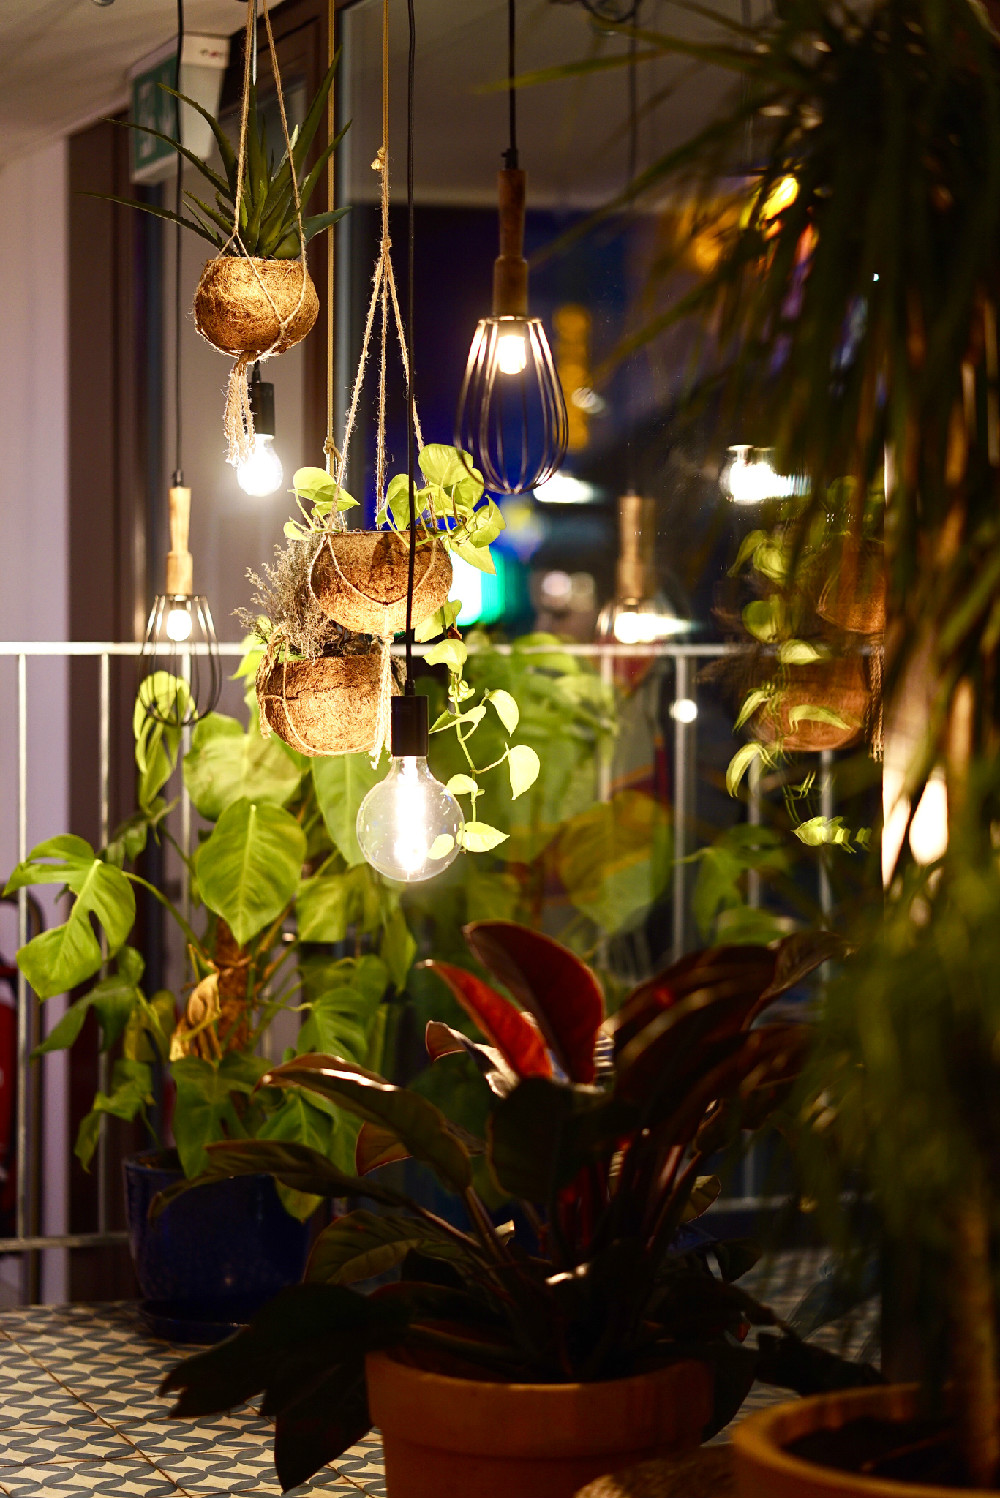 How to turn your flat into an urban jungle #urbanjungle #gardening #plants